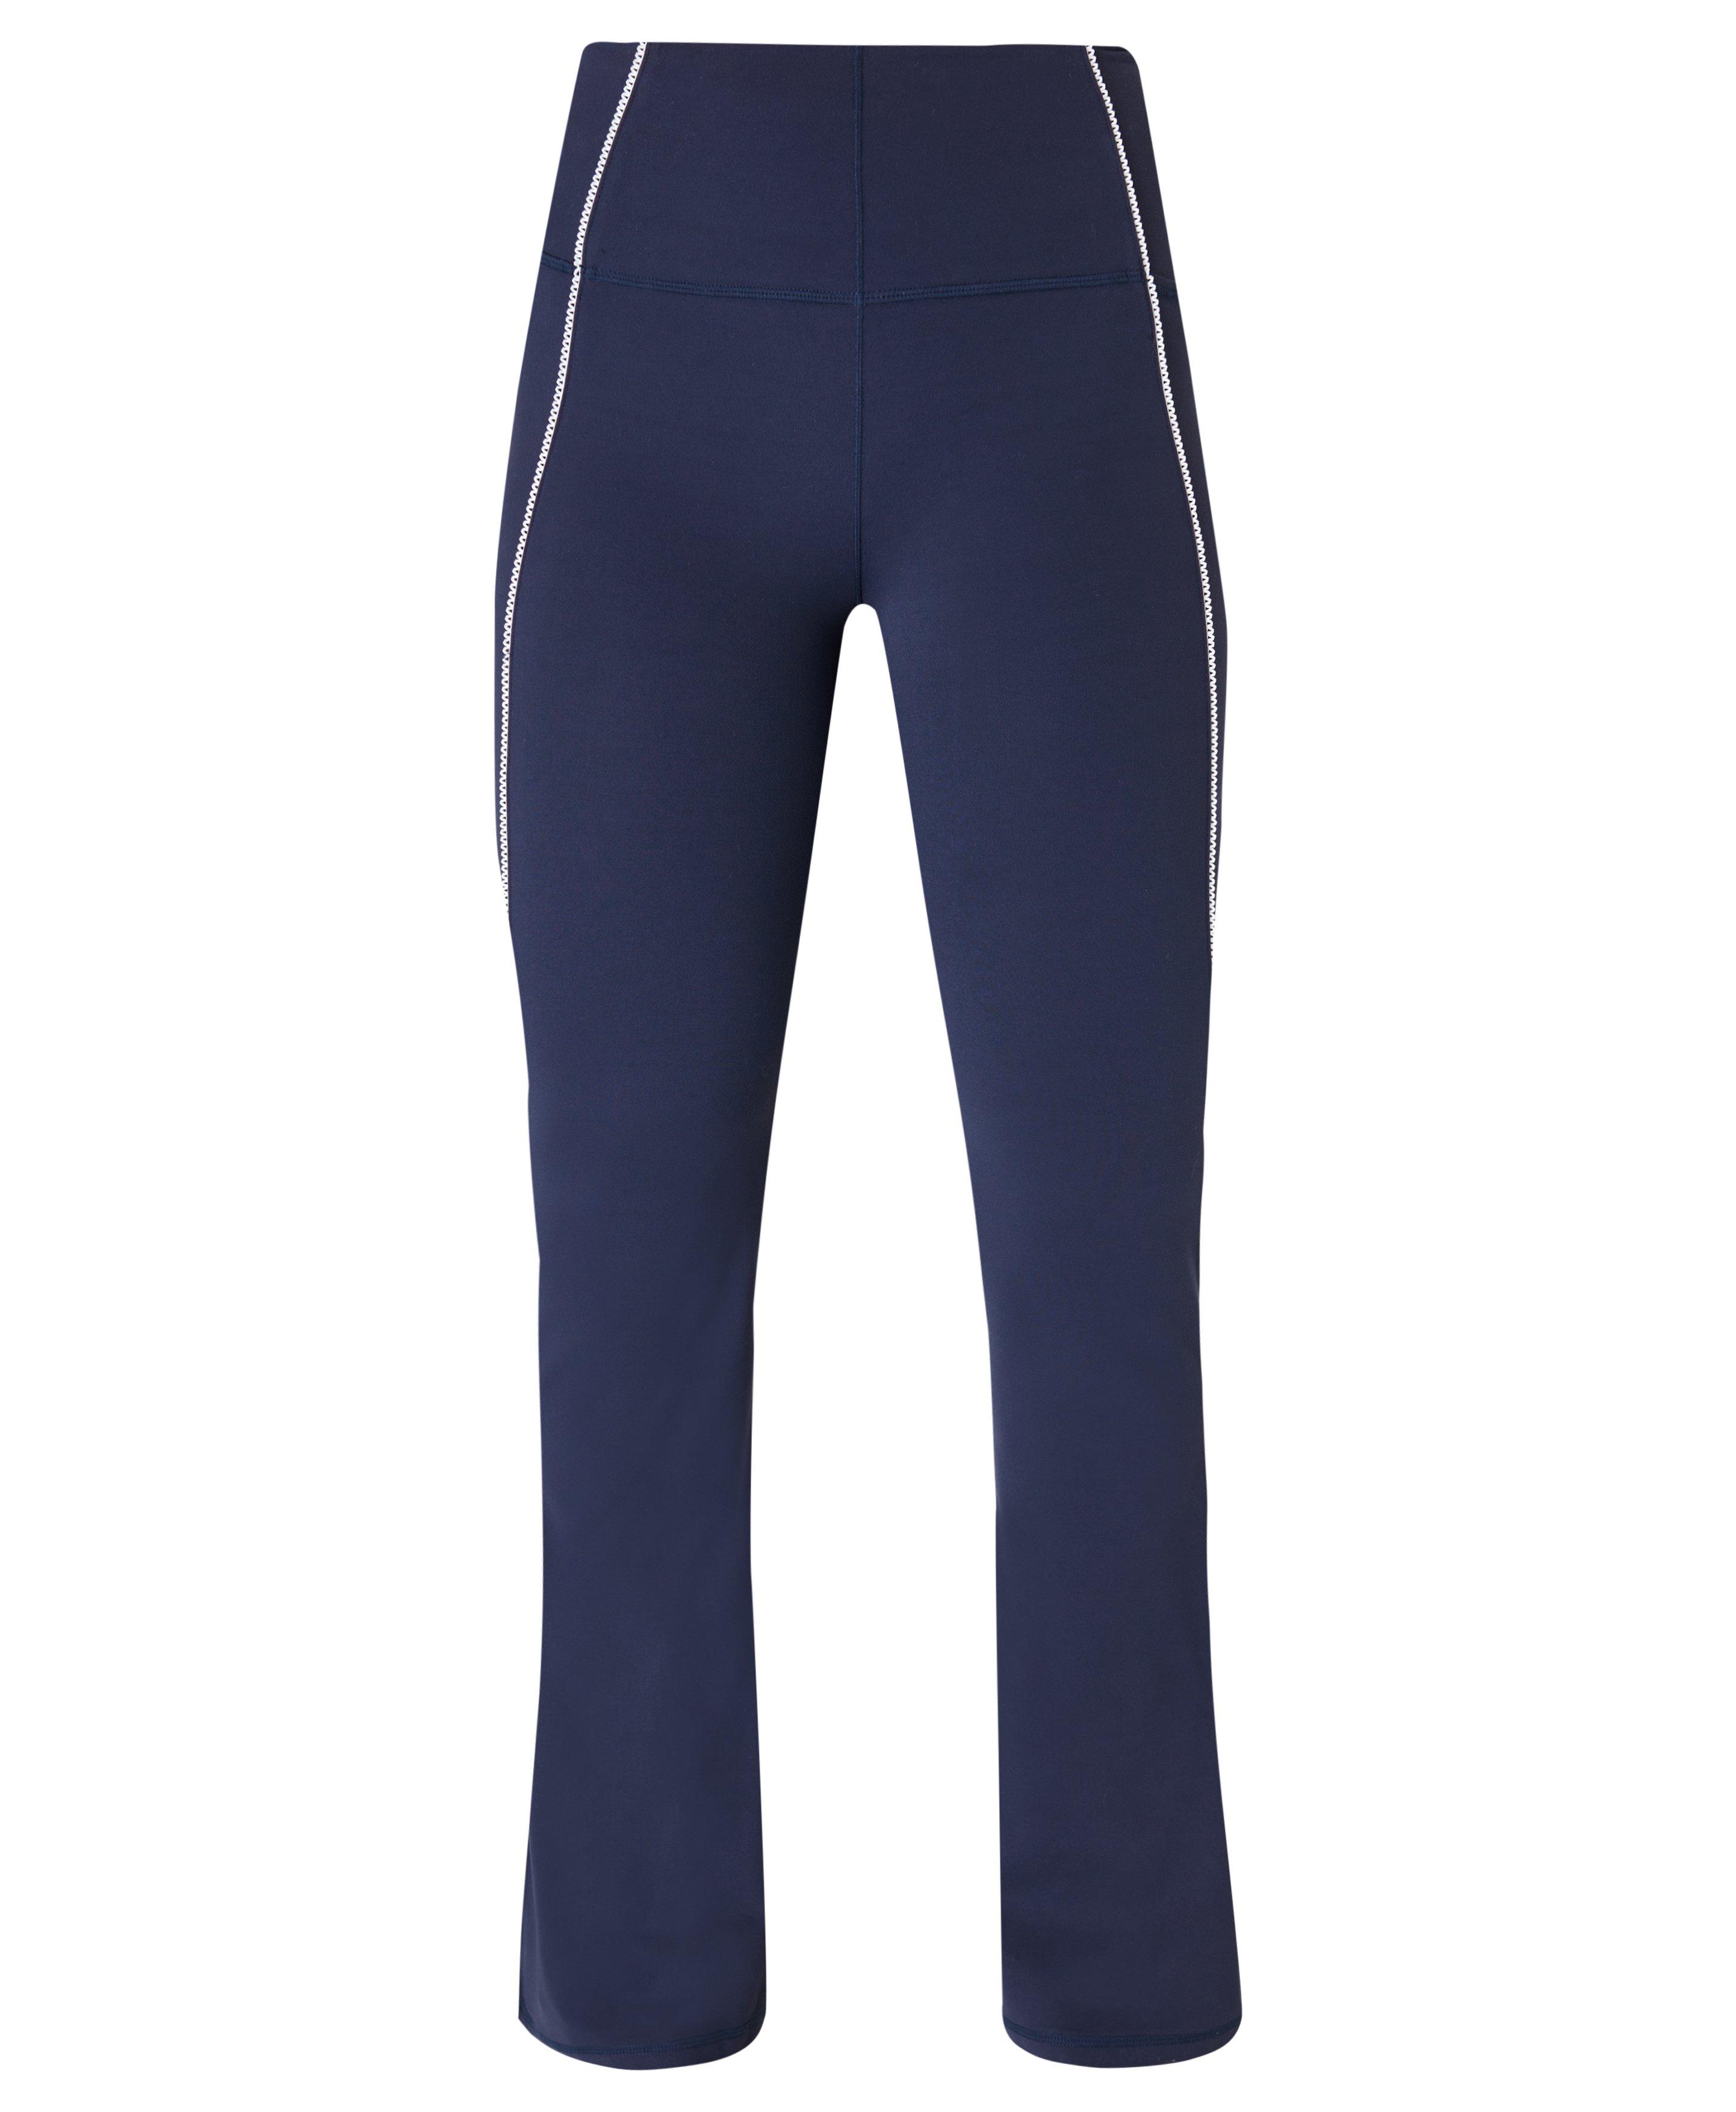 Super Soft Picot Lace Flare Pants - Navy Blue